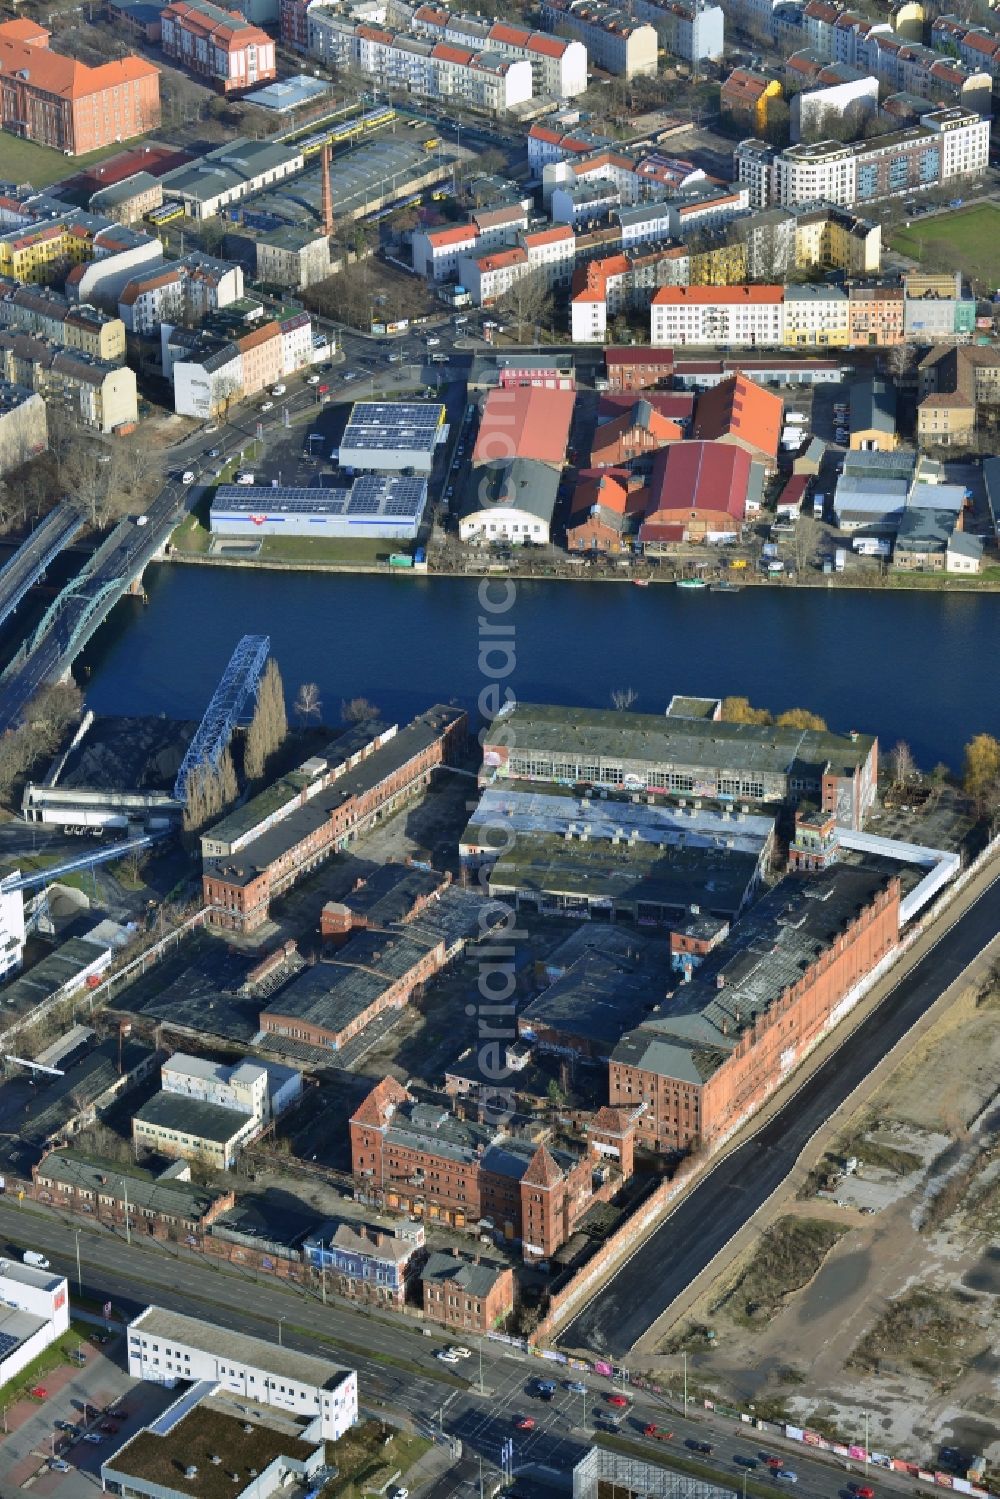 Aerial image Berlin - Industrial ruins of the former Baerenquell brewery at the Schnellerstrasse in Niederschoeneweide in Berlin